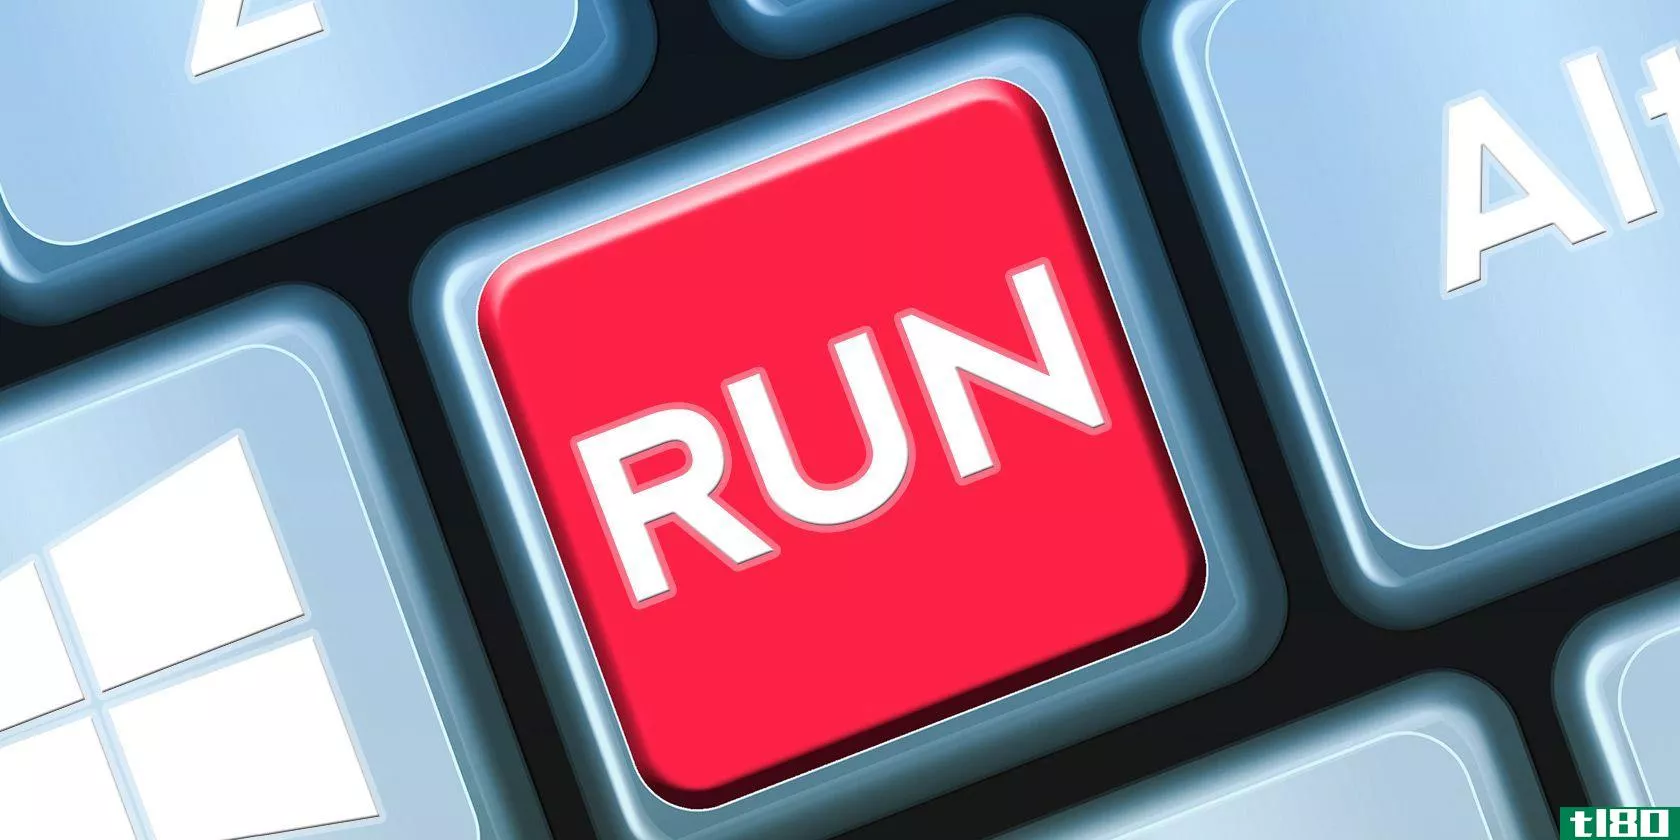 Close-up of Run button/key